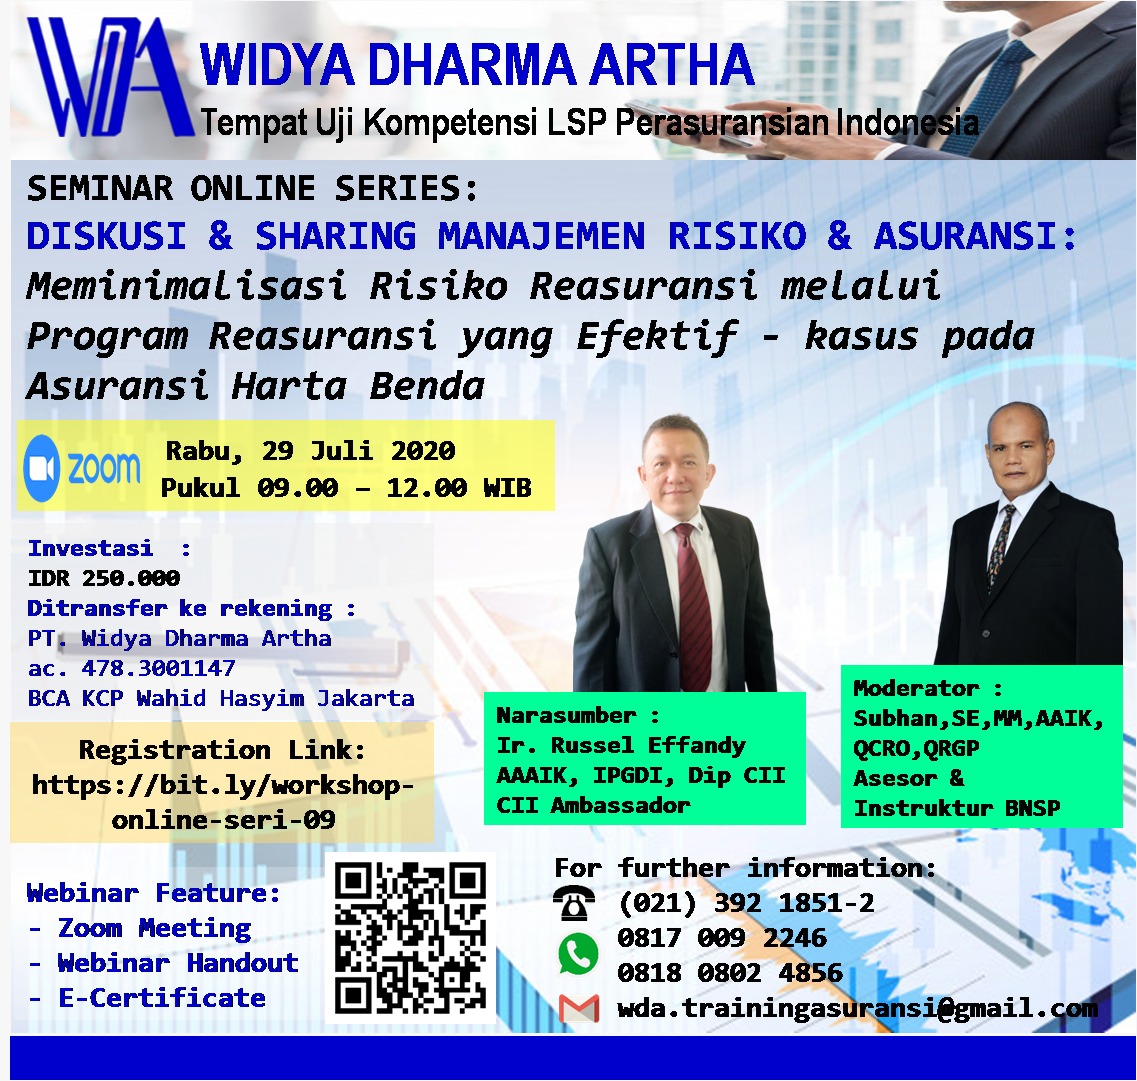 wda-webinar_program-reasuransi-properti-efektif_rabu-29-juli-2020_0900-1200